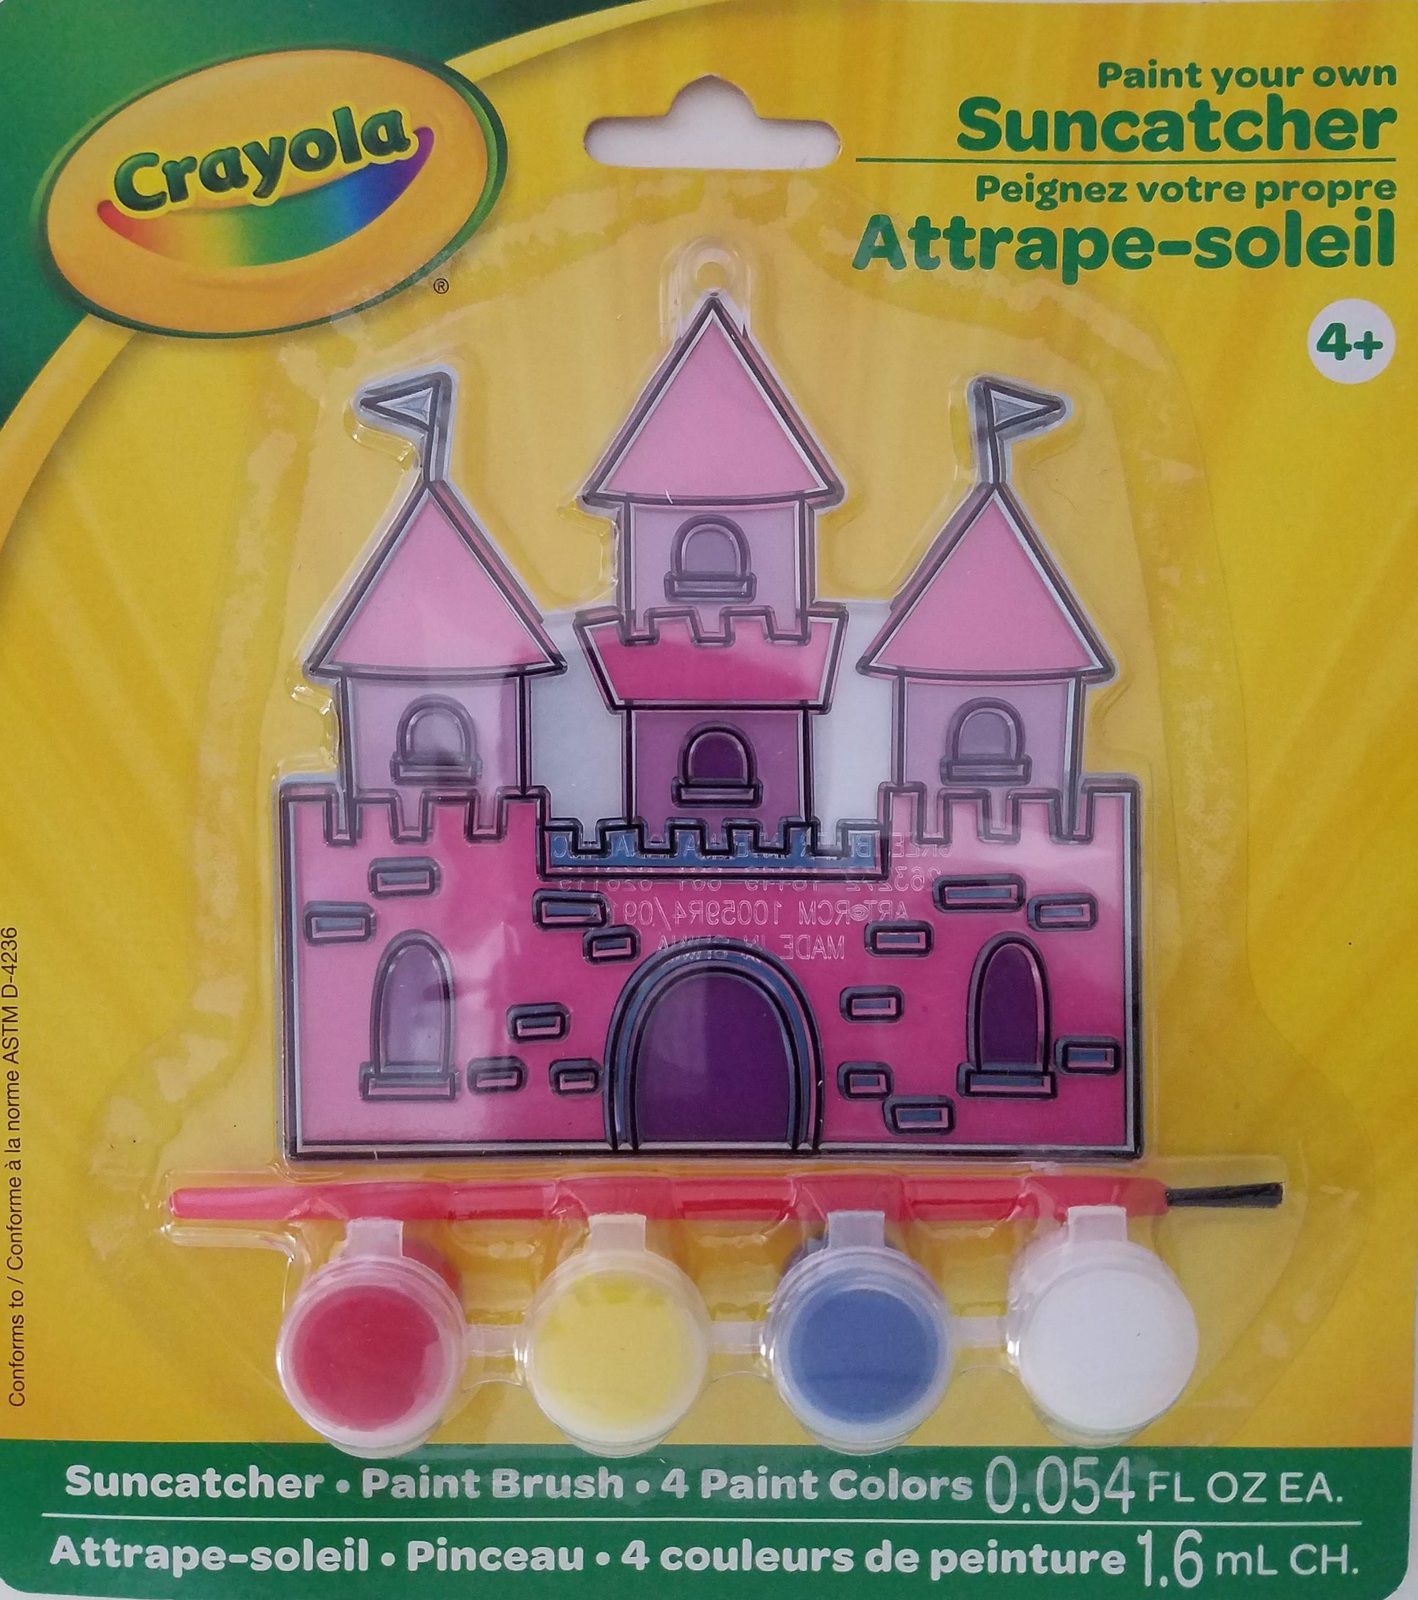 Crayola Paint your own Suncatcher Owl / birdSun Catcher Craft Kit NEW! FUN!!